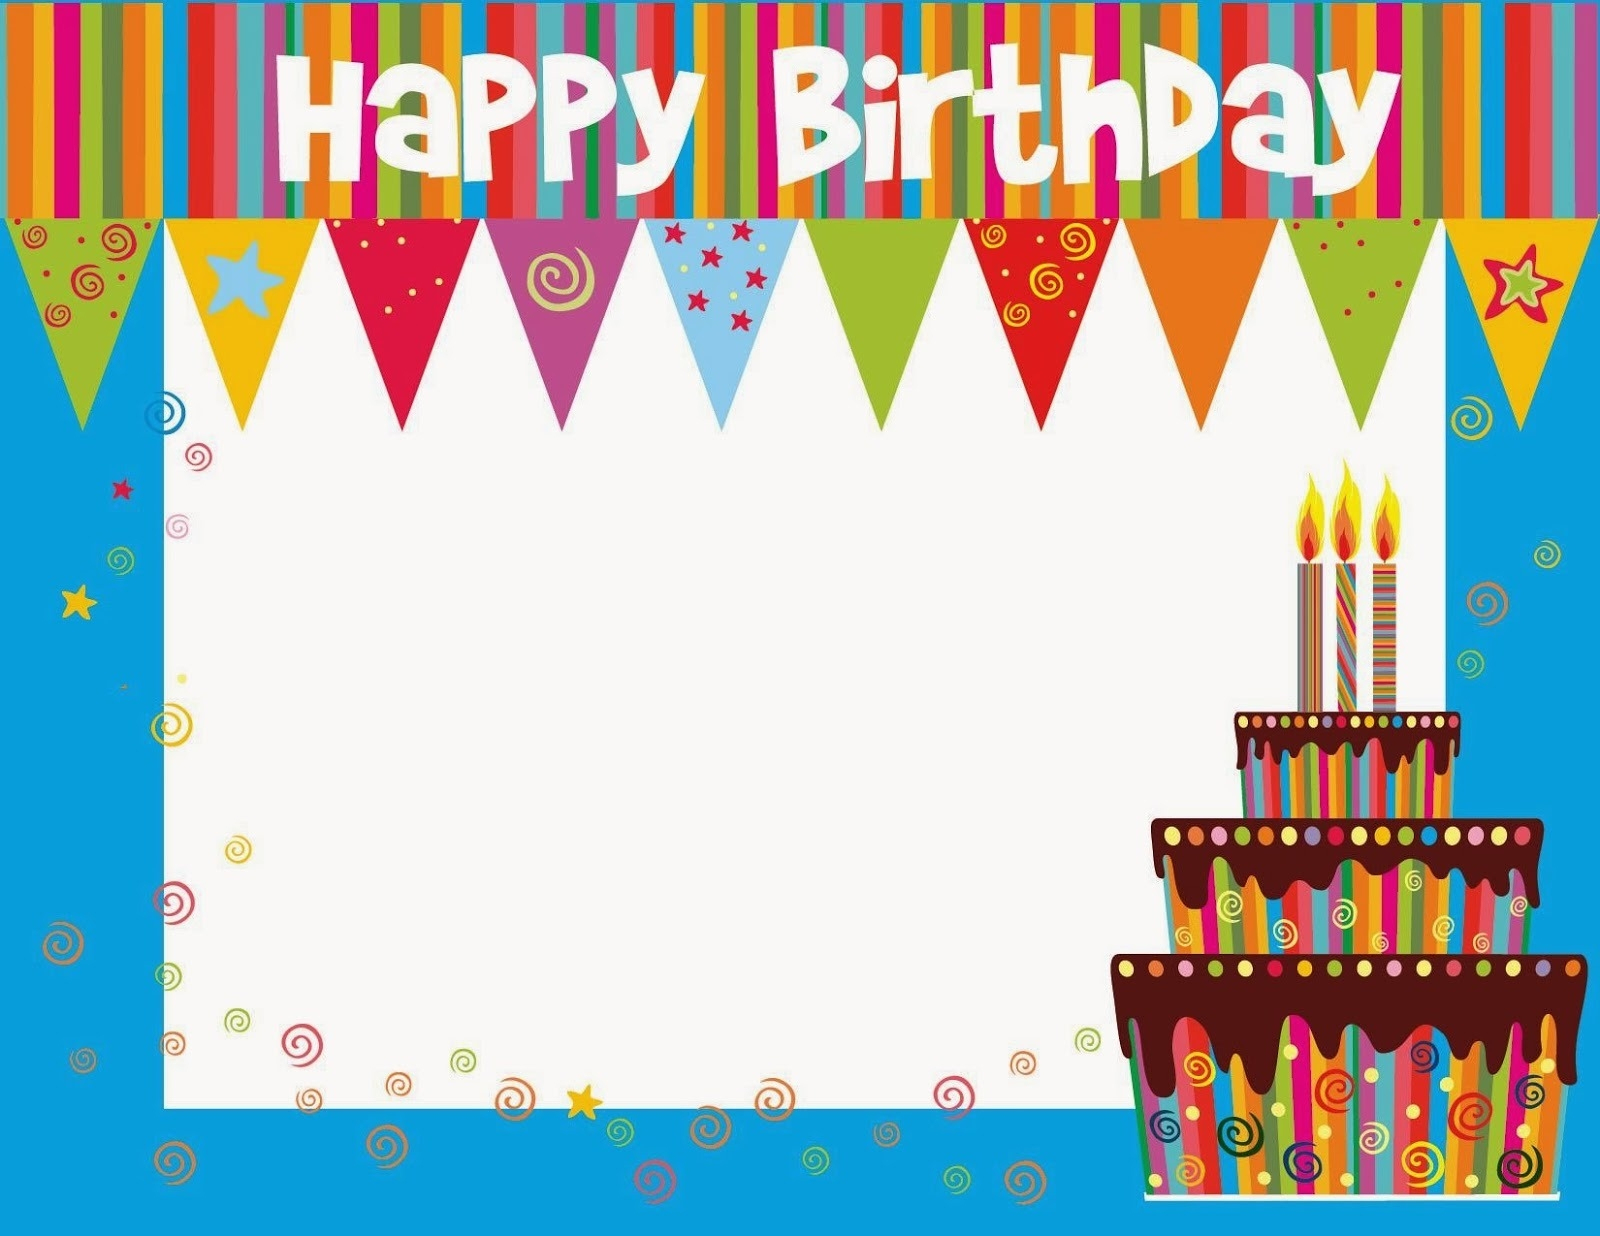 Happy Birthday Cards Online Free Printable – Happy Holidays! Inside - Free Printable Happy Birthday Cards Online